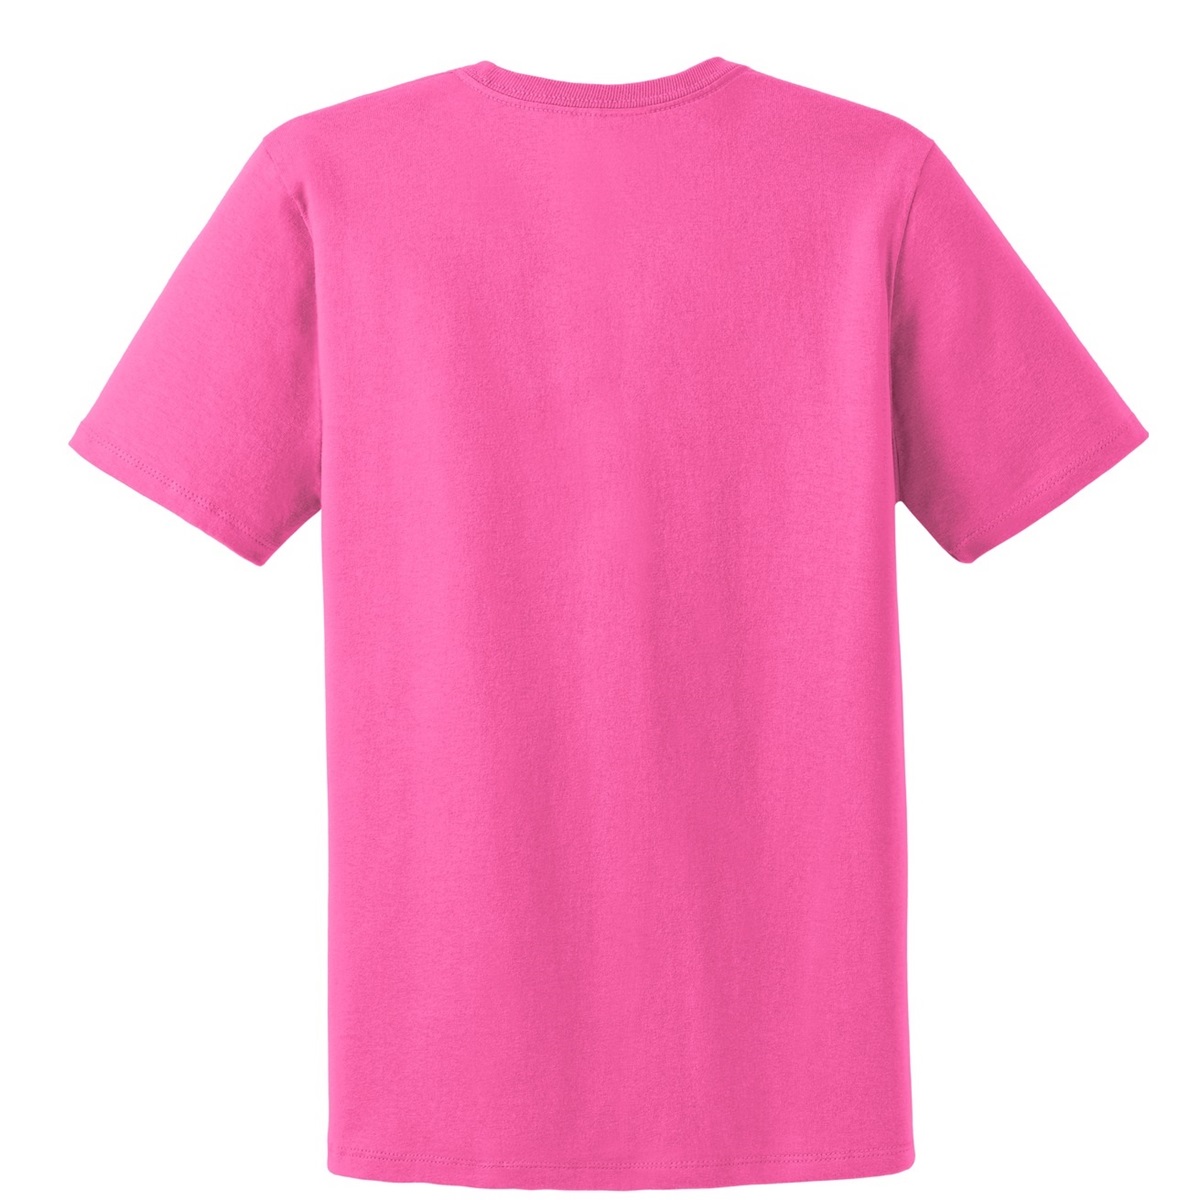 Hanes 5780 Ladies ComfortSoft V-Neck T-Shirt - Pink | FullSource.com